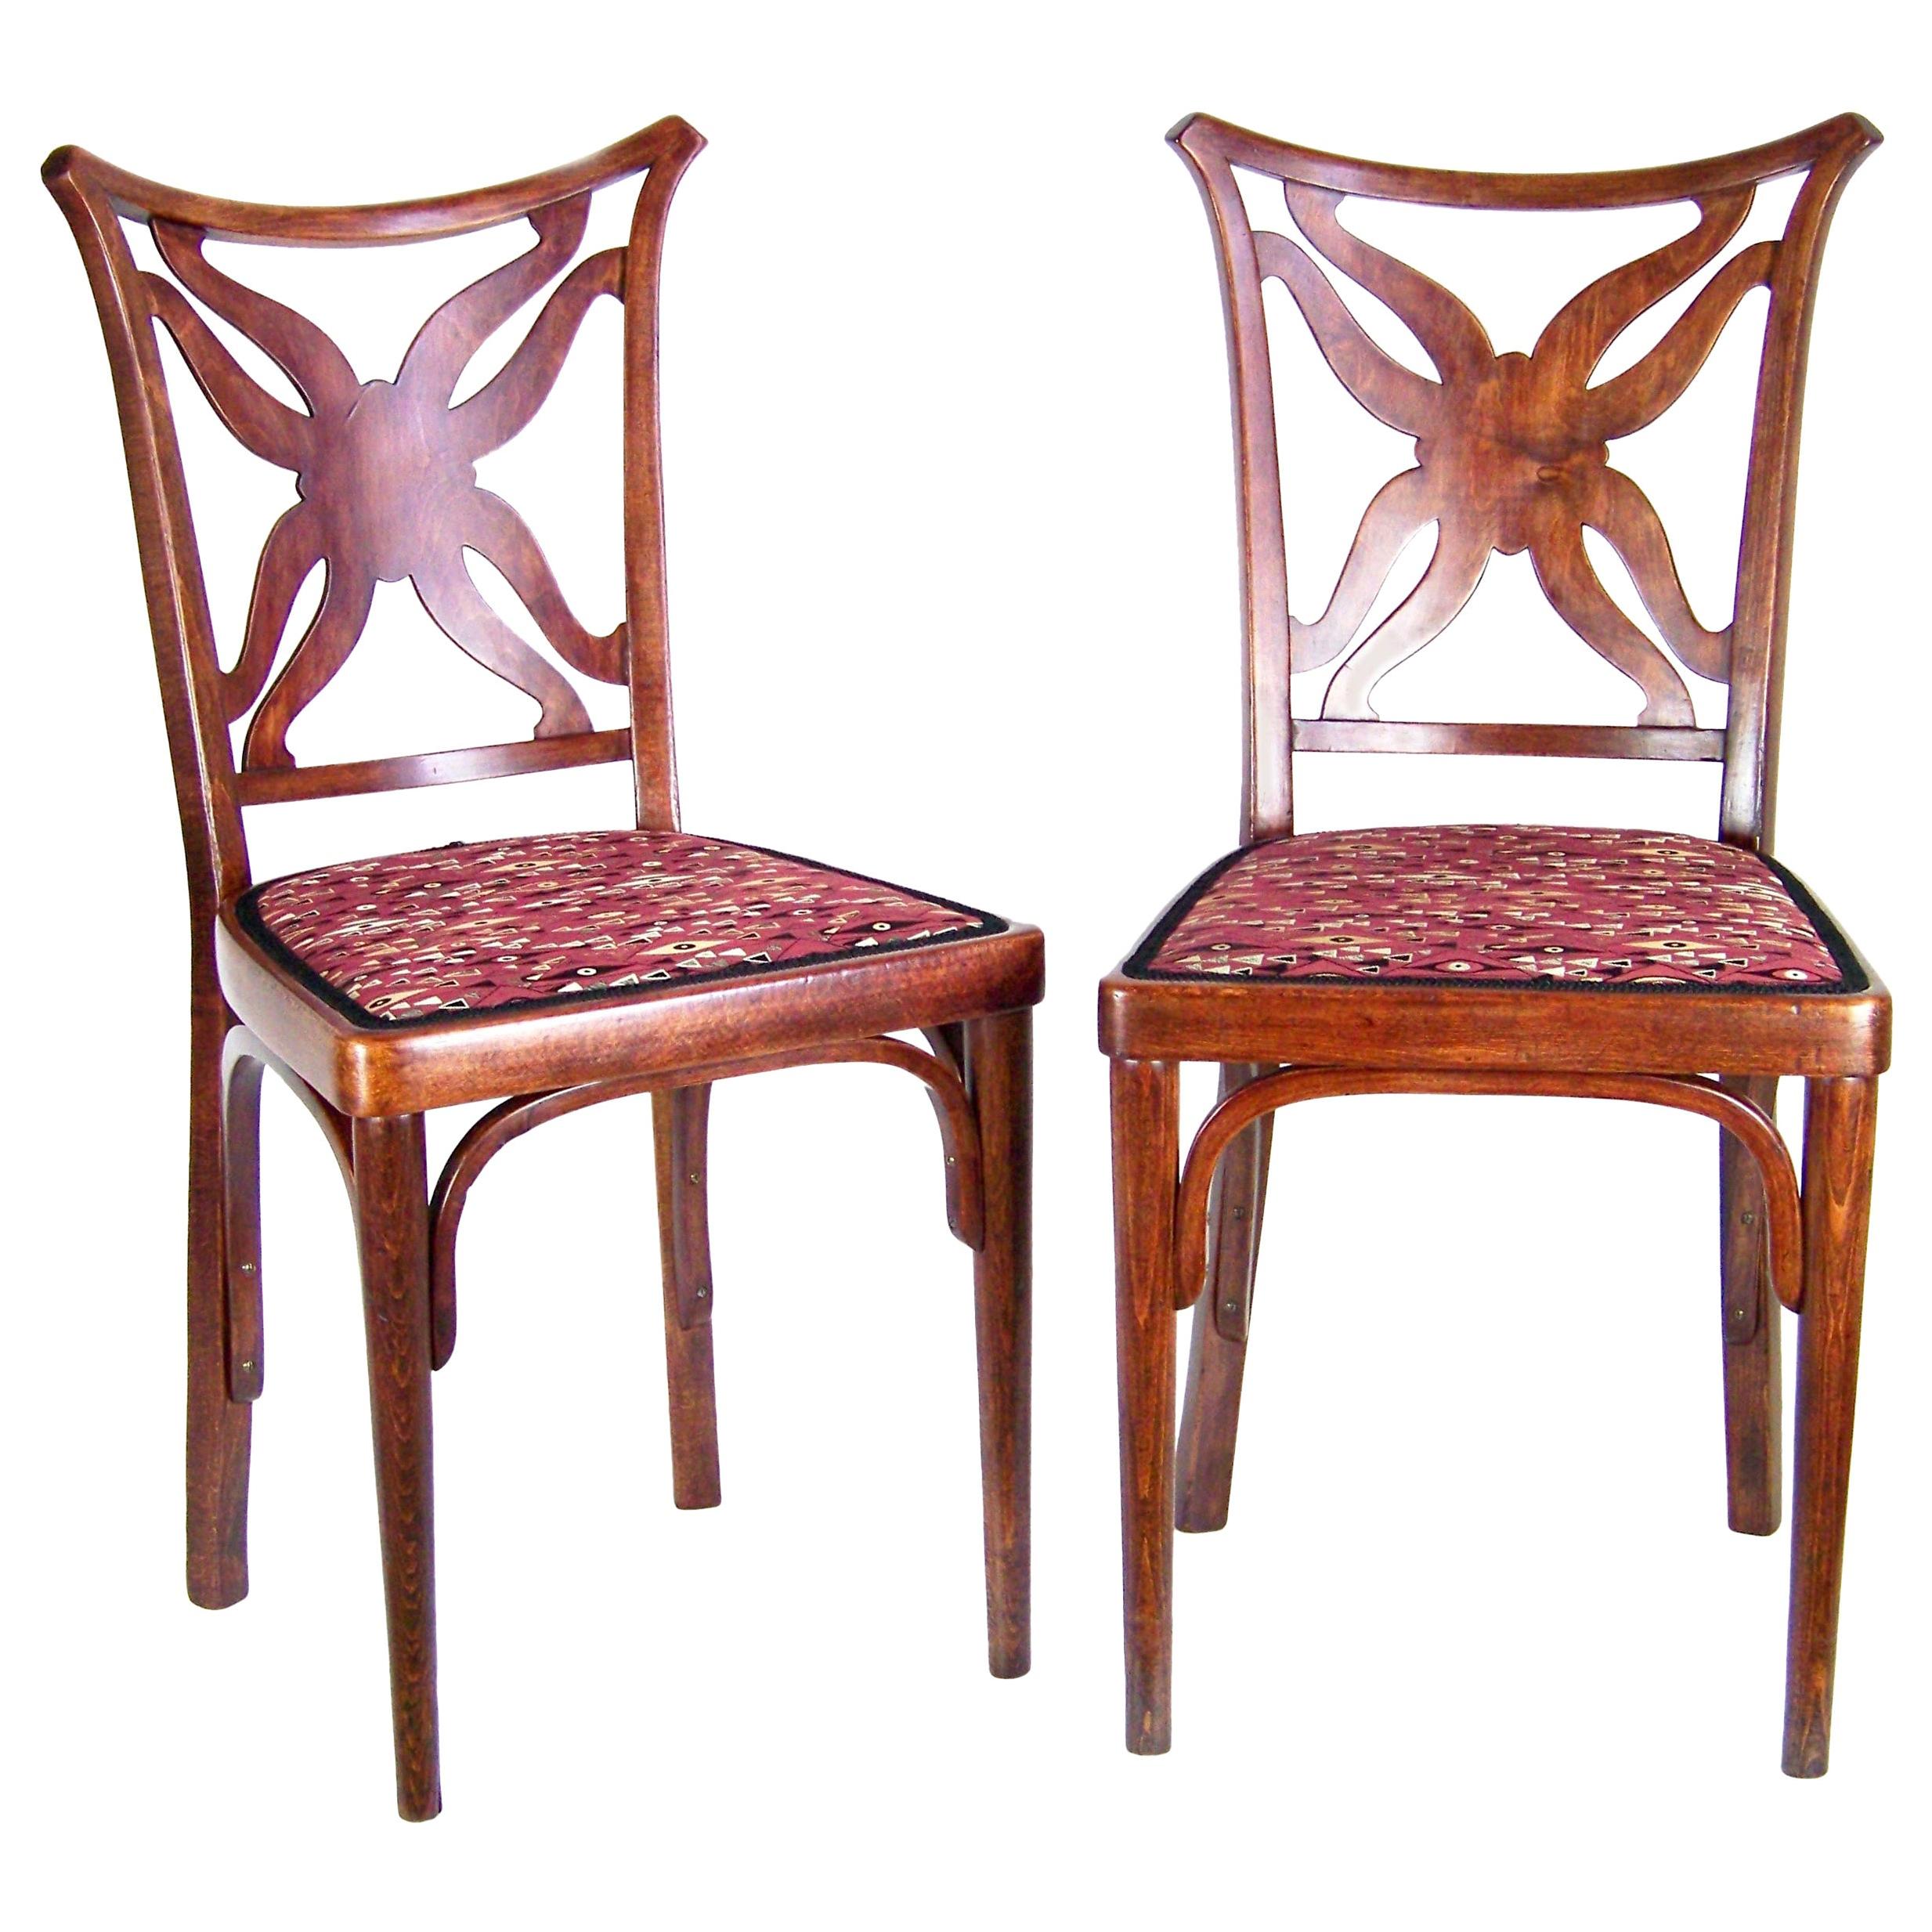 Two Unique Chairs J&J Kohn from 1915, Hotel Ambassador in Prague, Josef Hoffmann For Sale